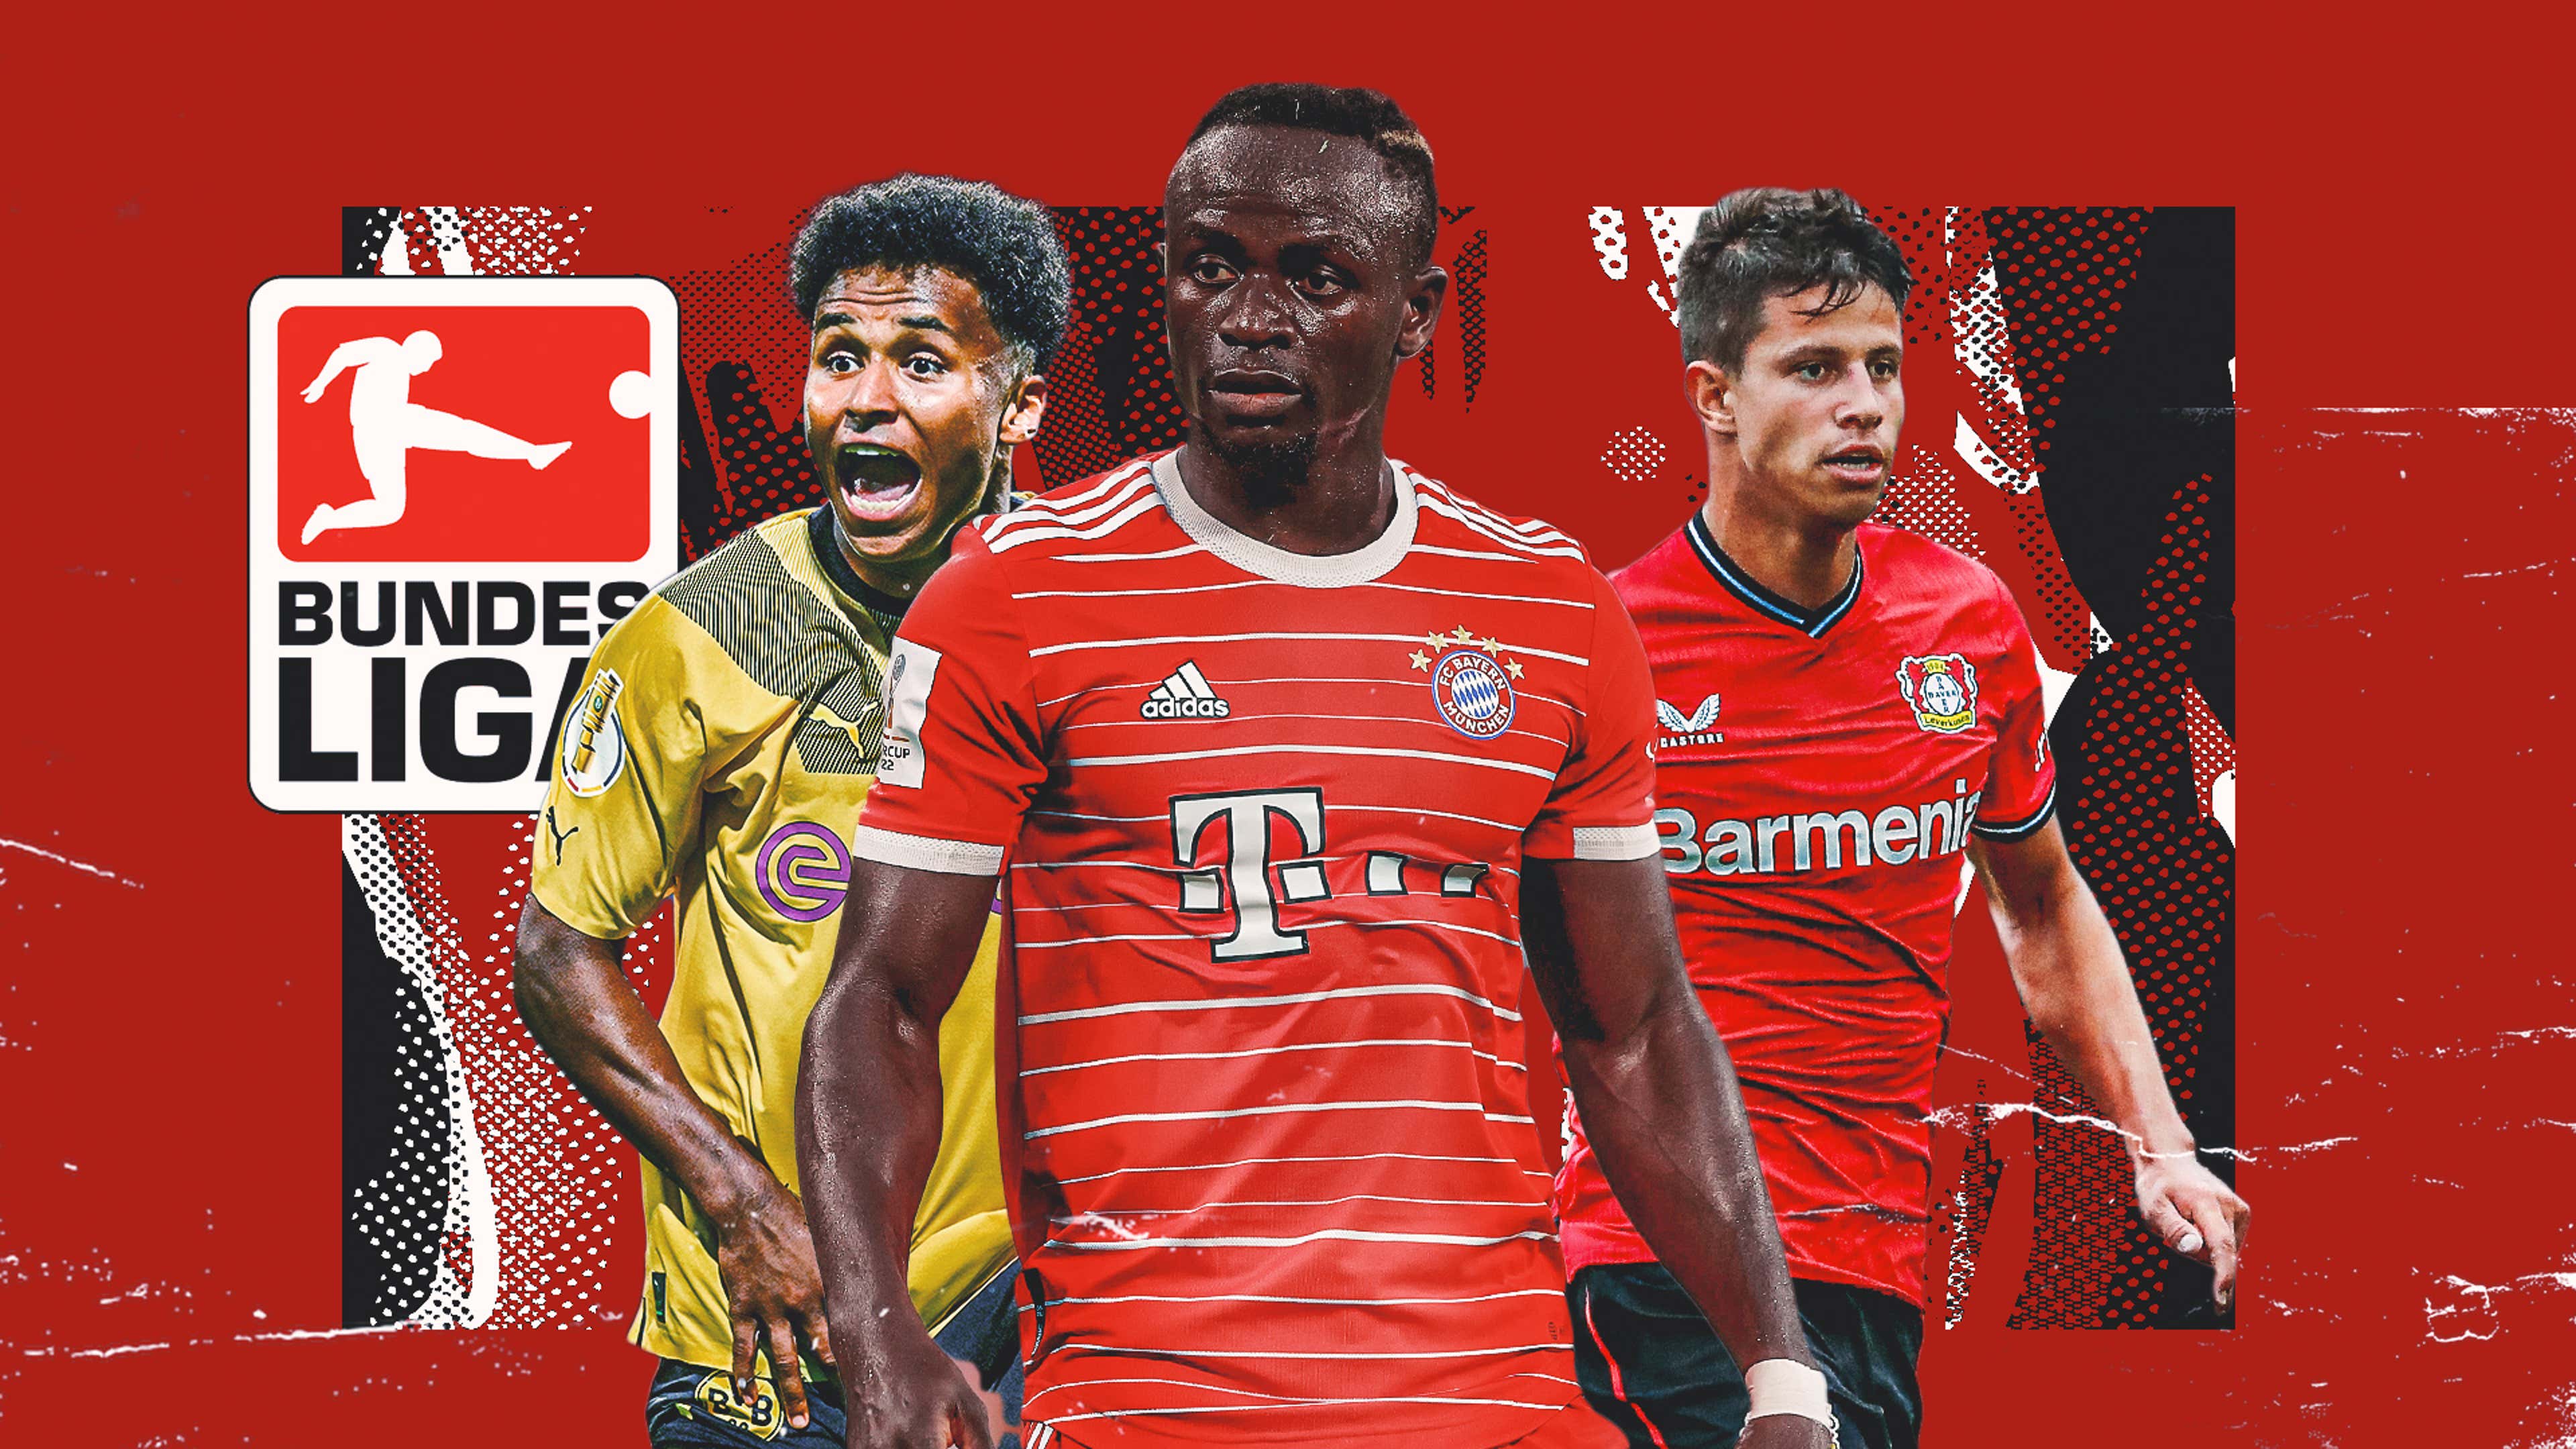 When does new Bundesliga season start for 2022-23? When will